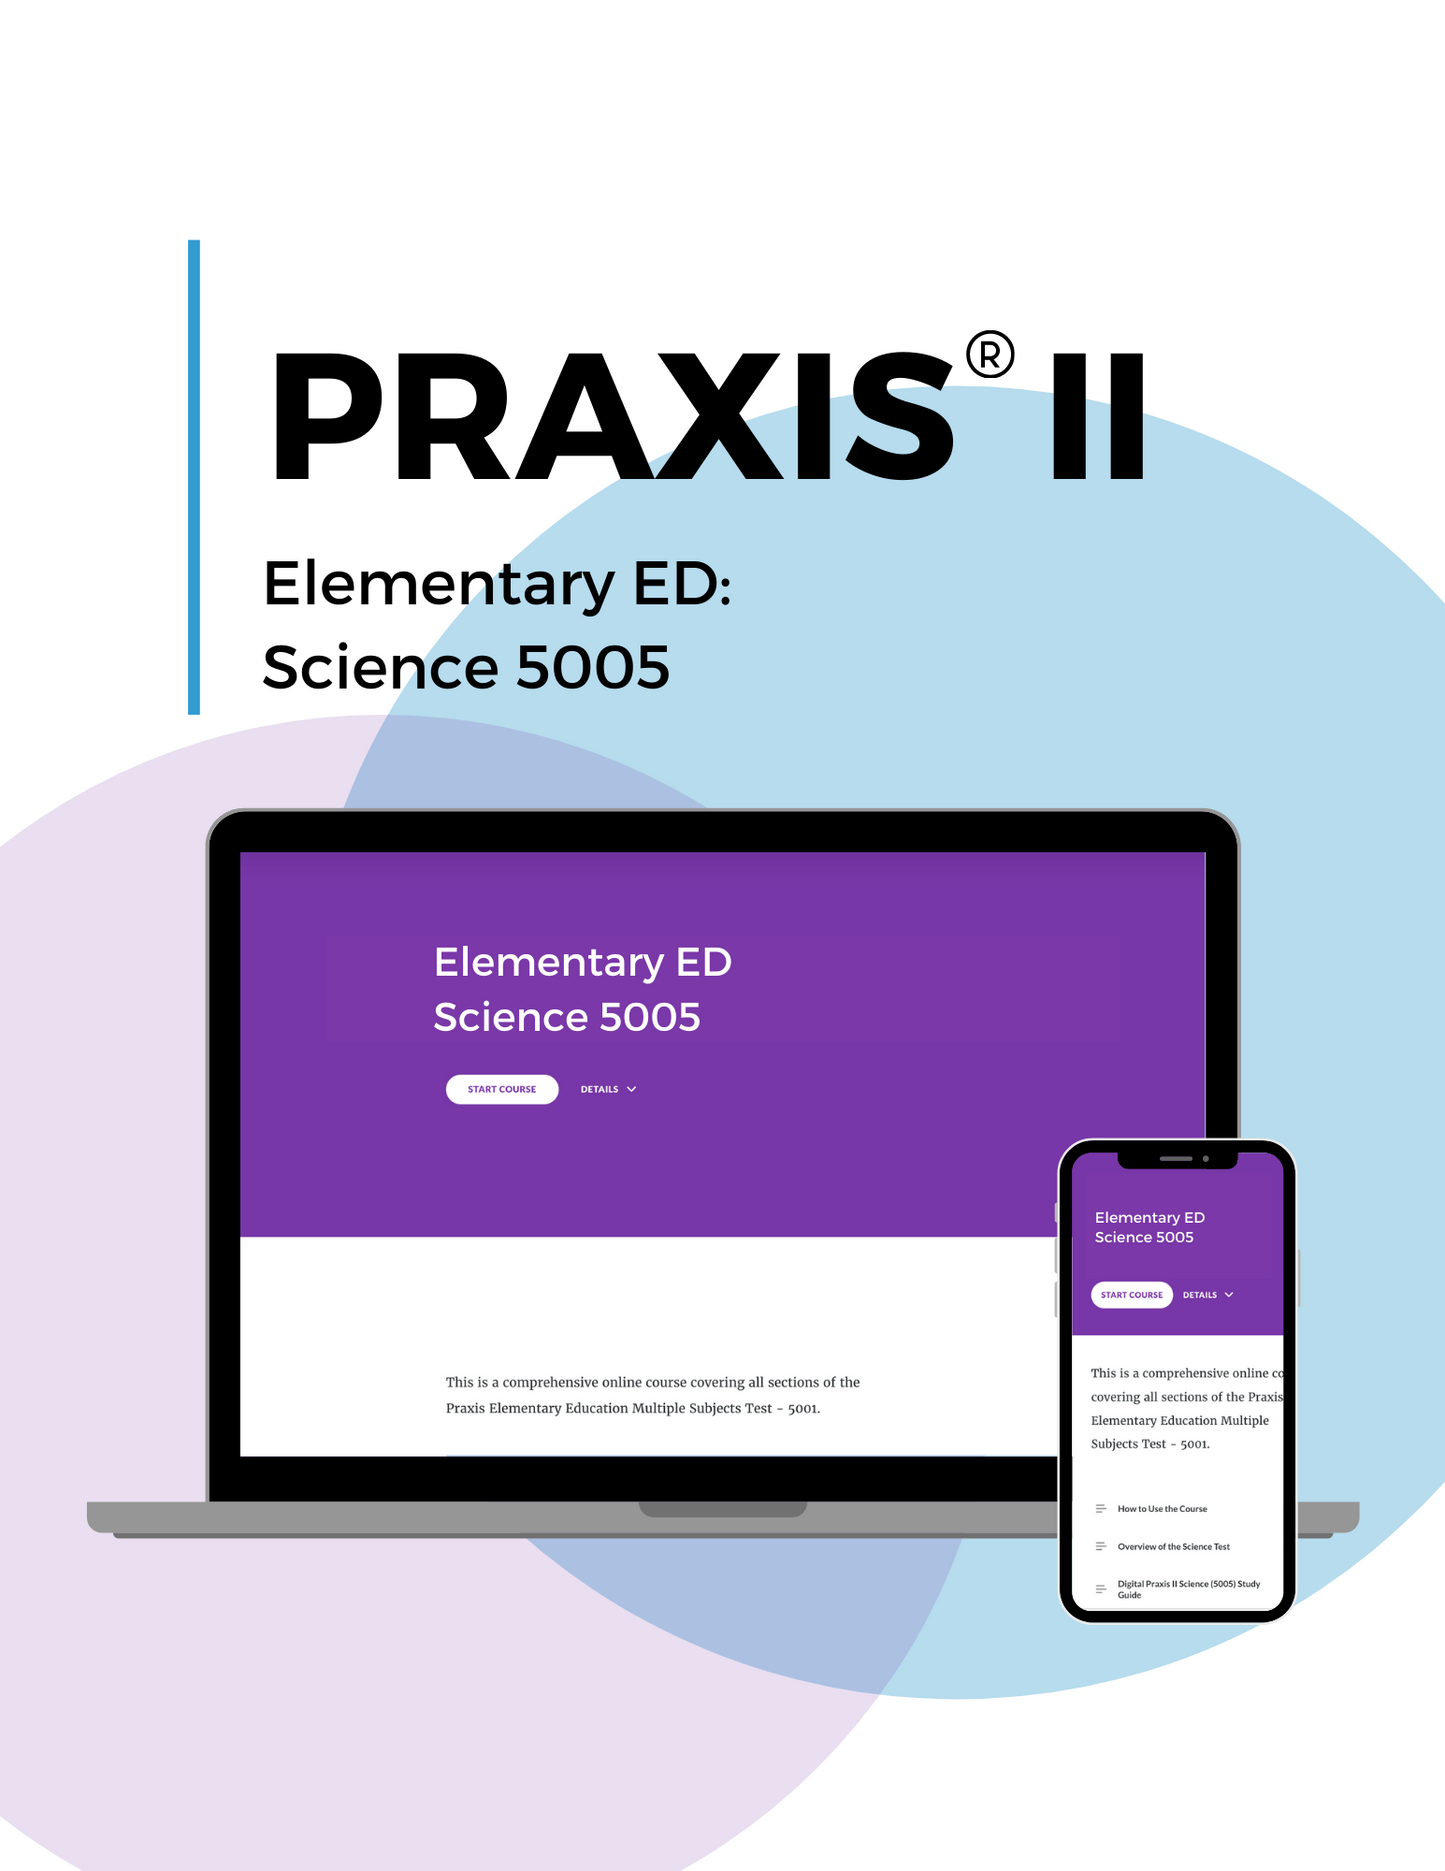 Praxis II Elementary ED: Science 5005